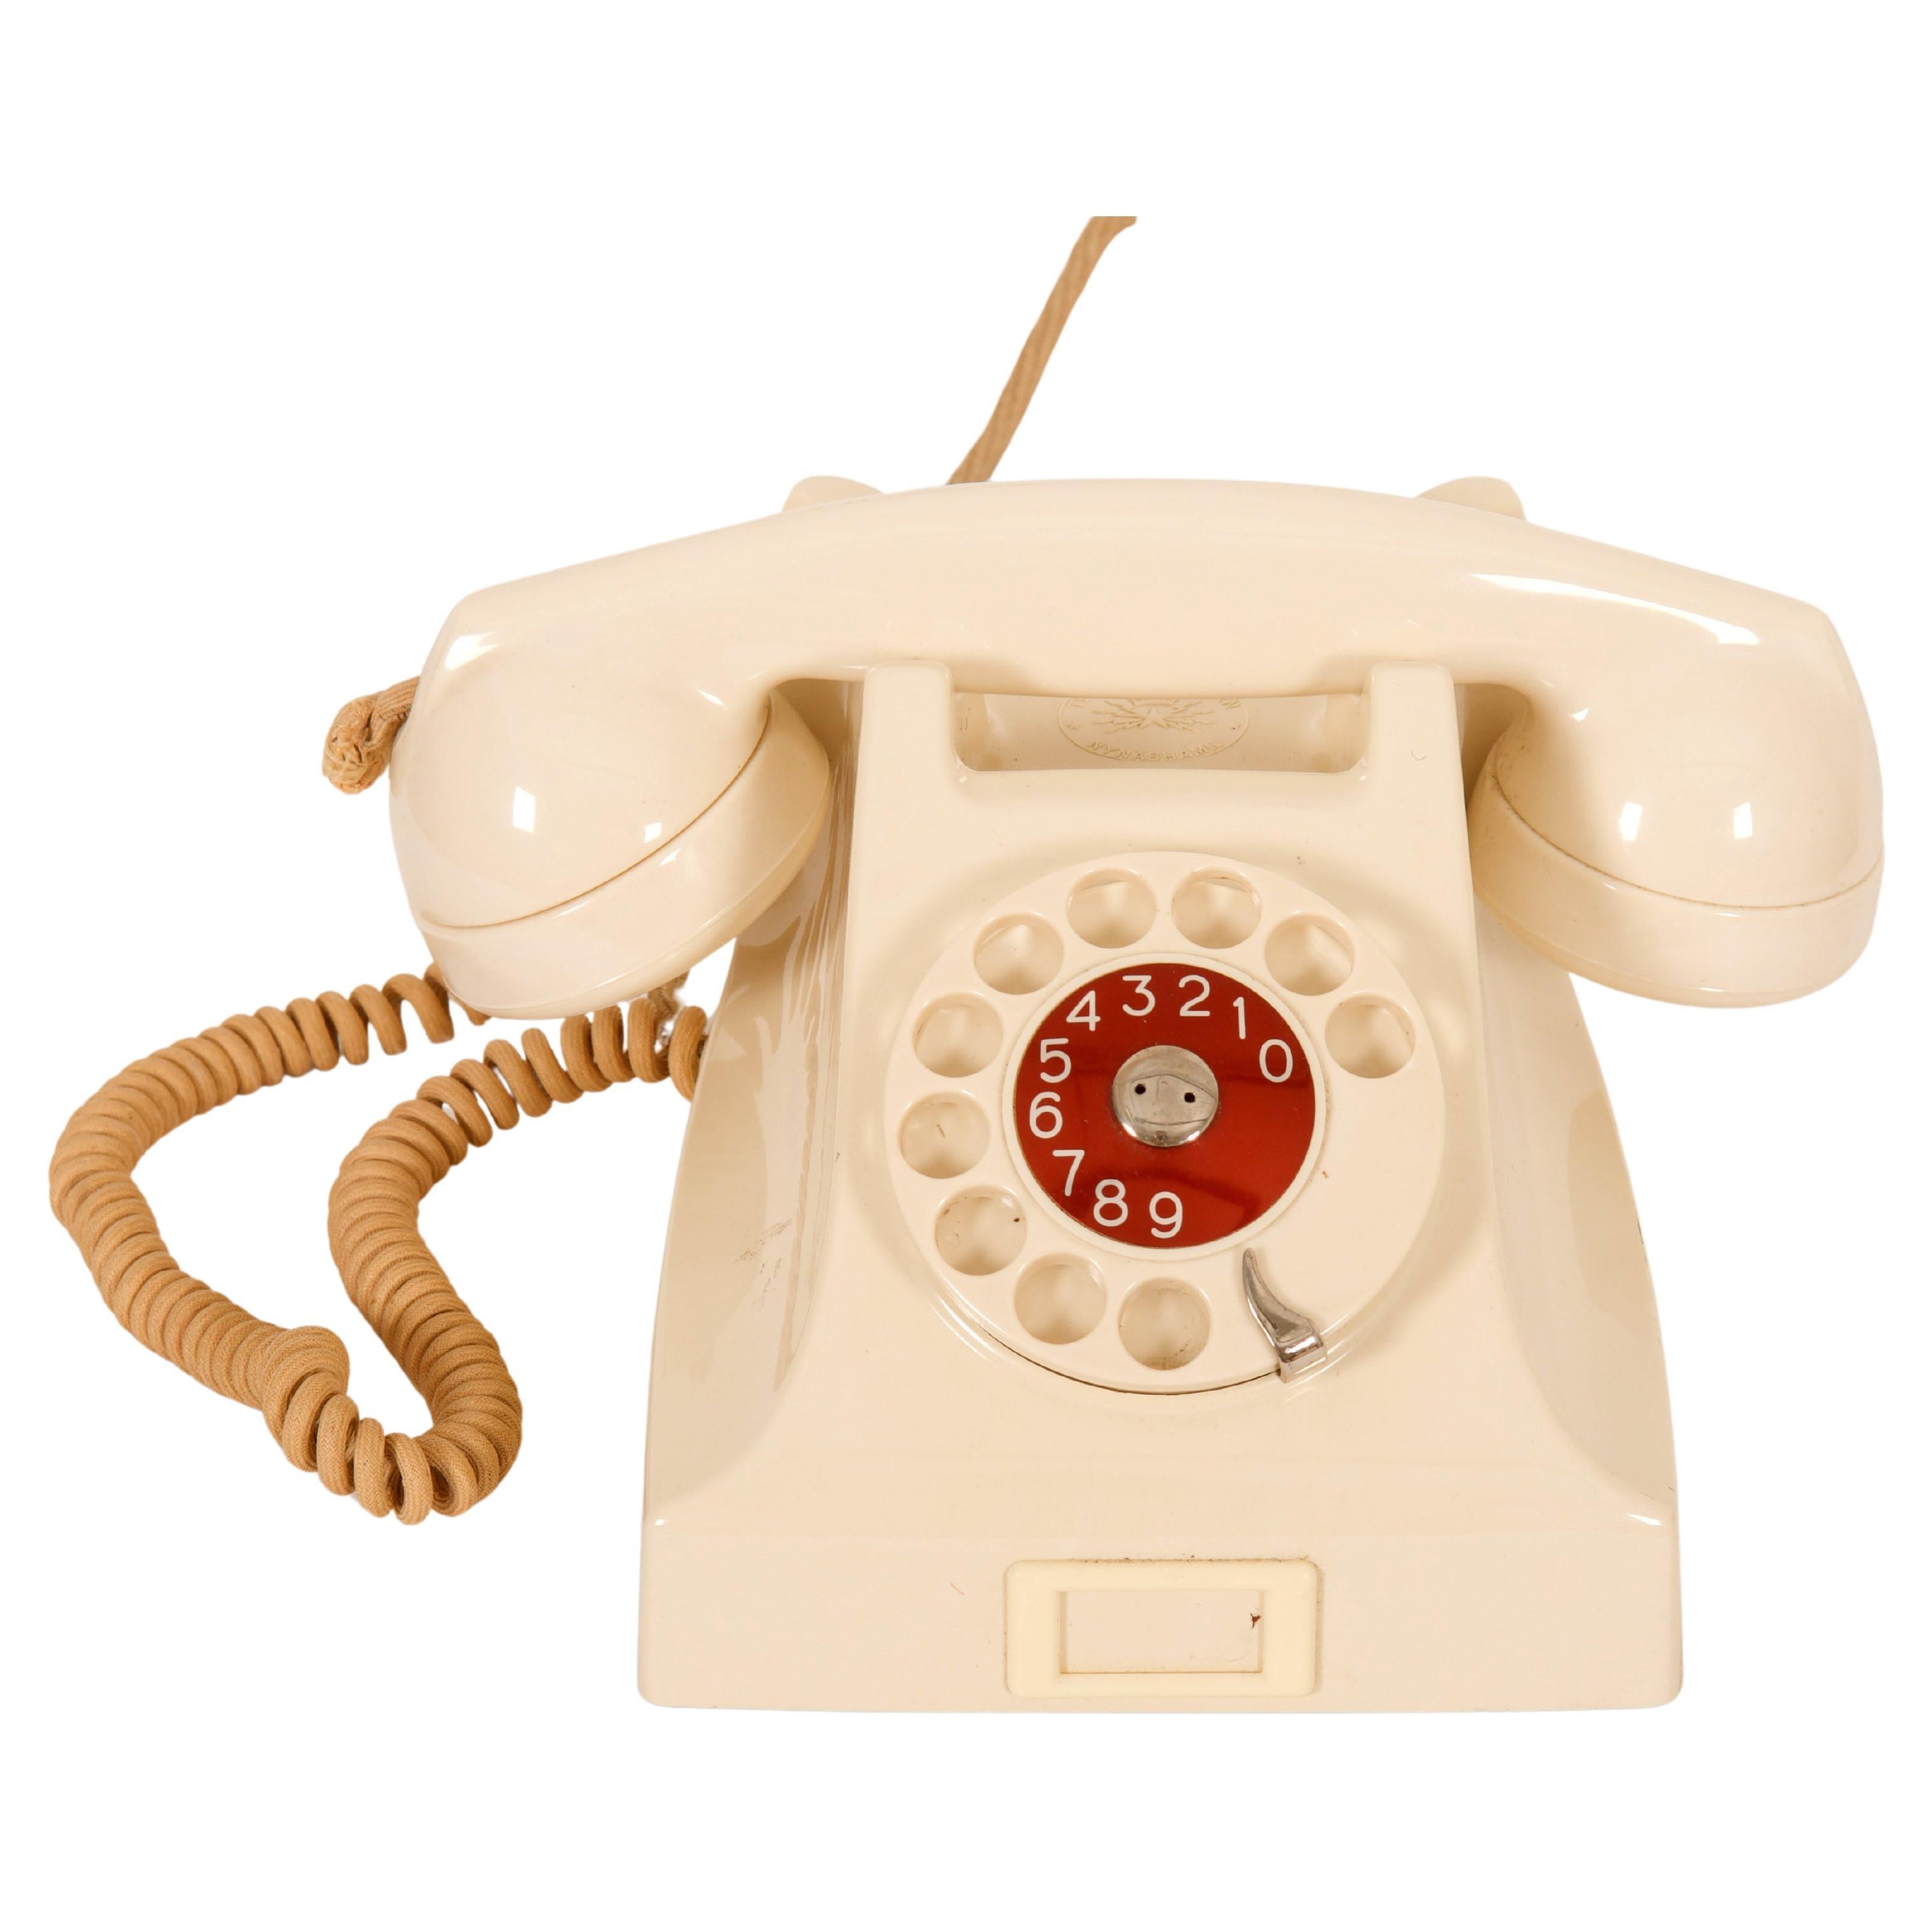 Phone suédois vintage de table en bakélite beige en vente